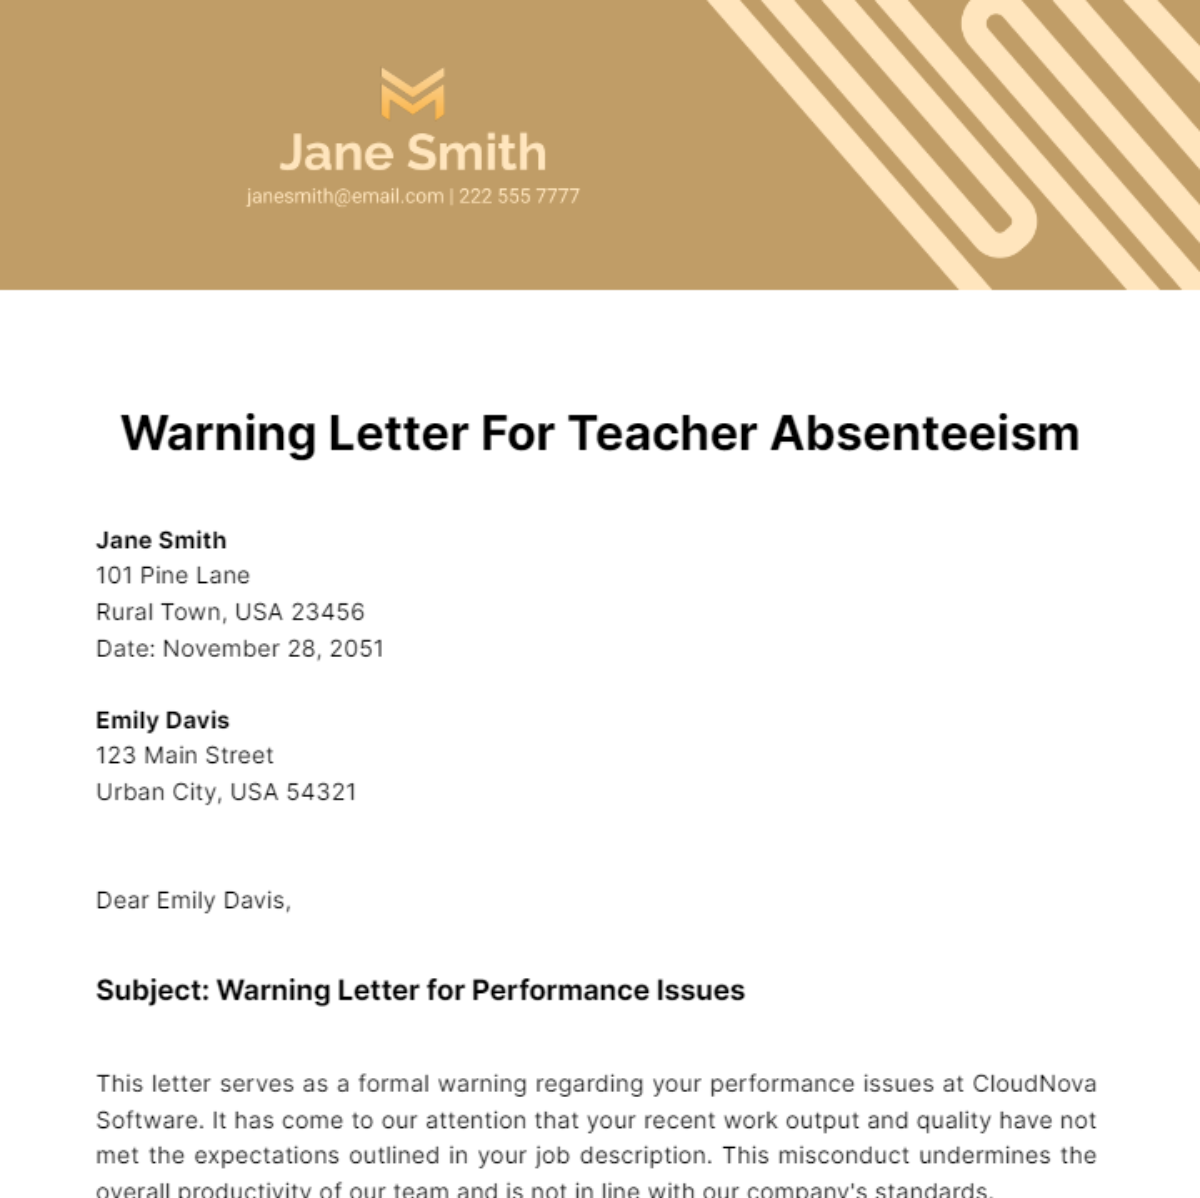 Warning Letter For Teacher Absenteeism Template